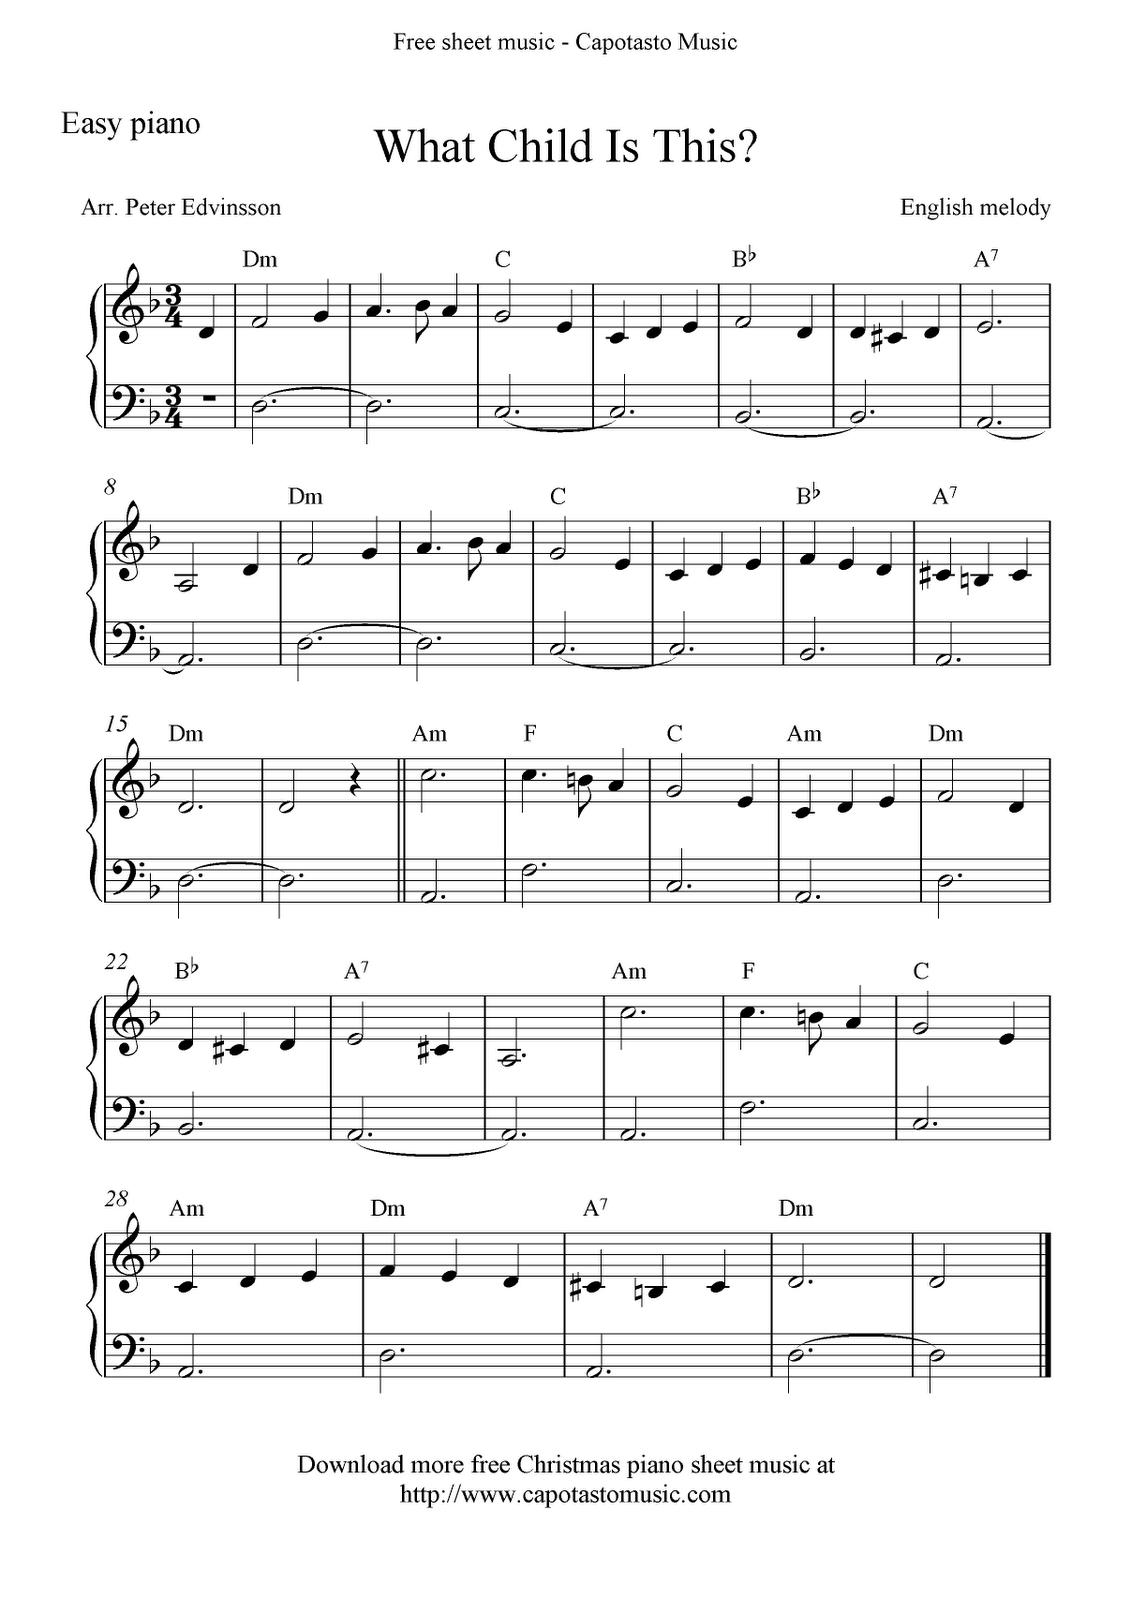 Free Sheet Music Scores Free Christmas Piano Sheet Music What Child Is This Sheet Music Piano Sheet Music Christmas Sheet Music - Christmas Piano Sheet Music Easy Free Printable